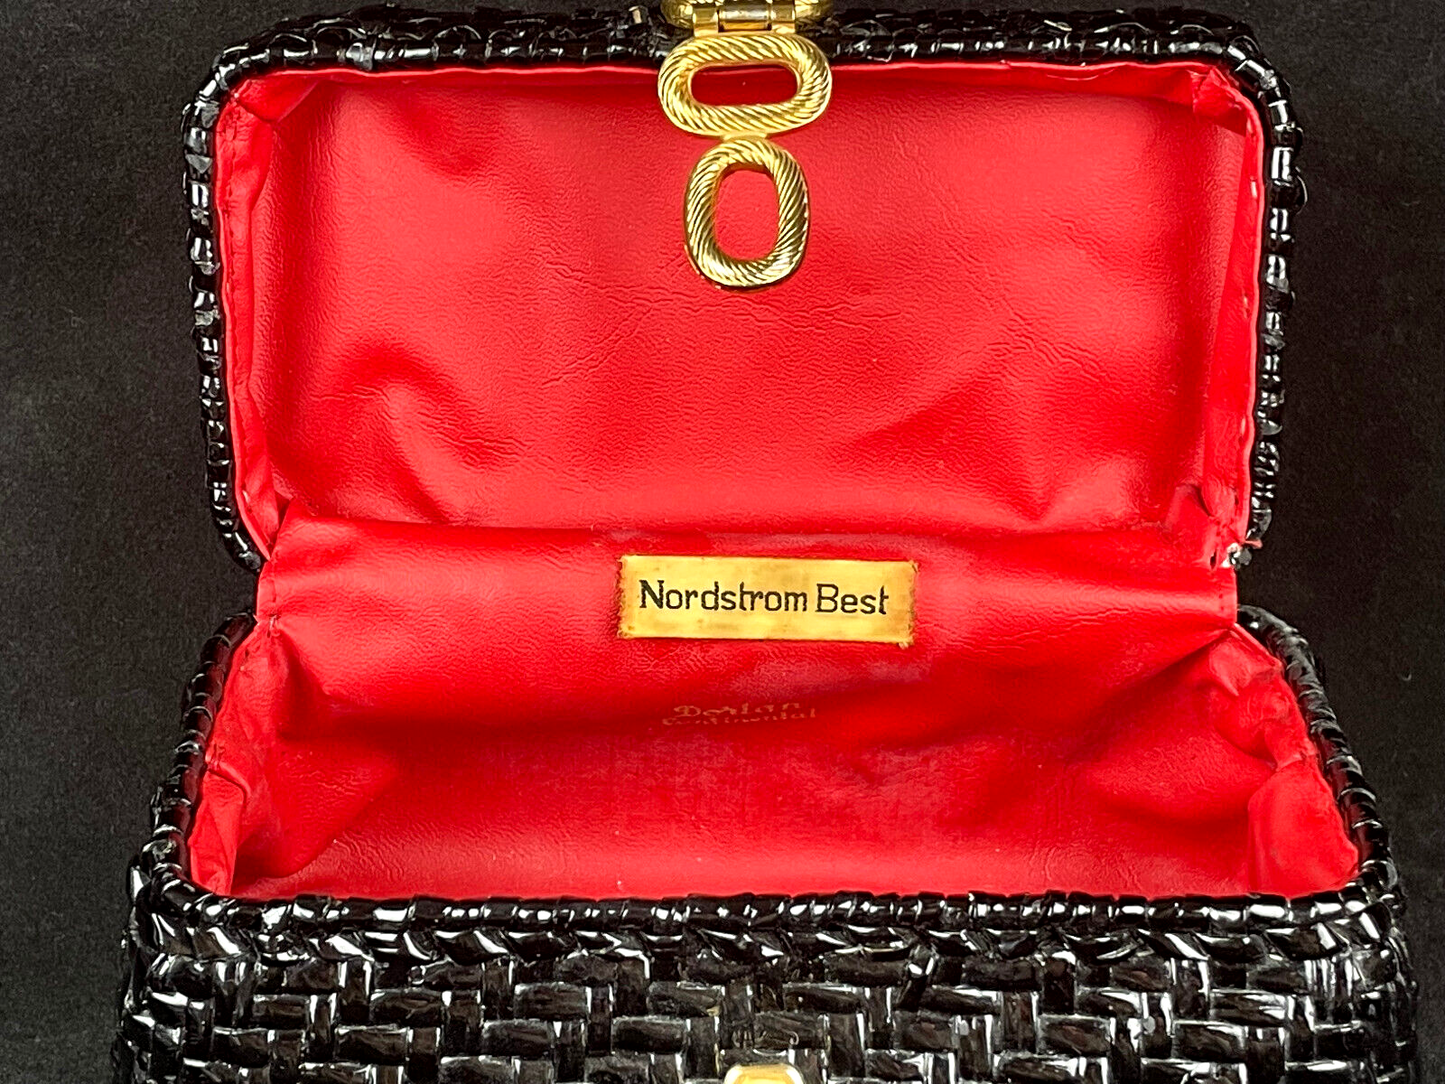 Four Vintage Designer Handbags Saks 5th Ave I. Magnin Oscar de la Renta